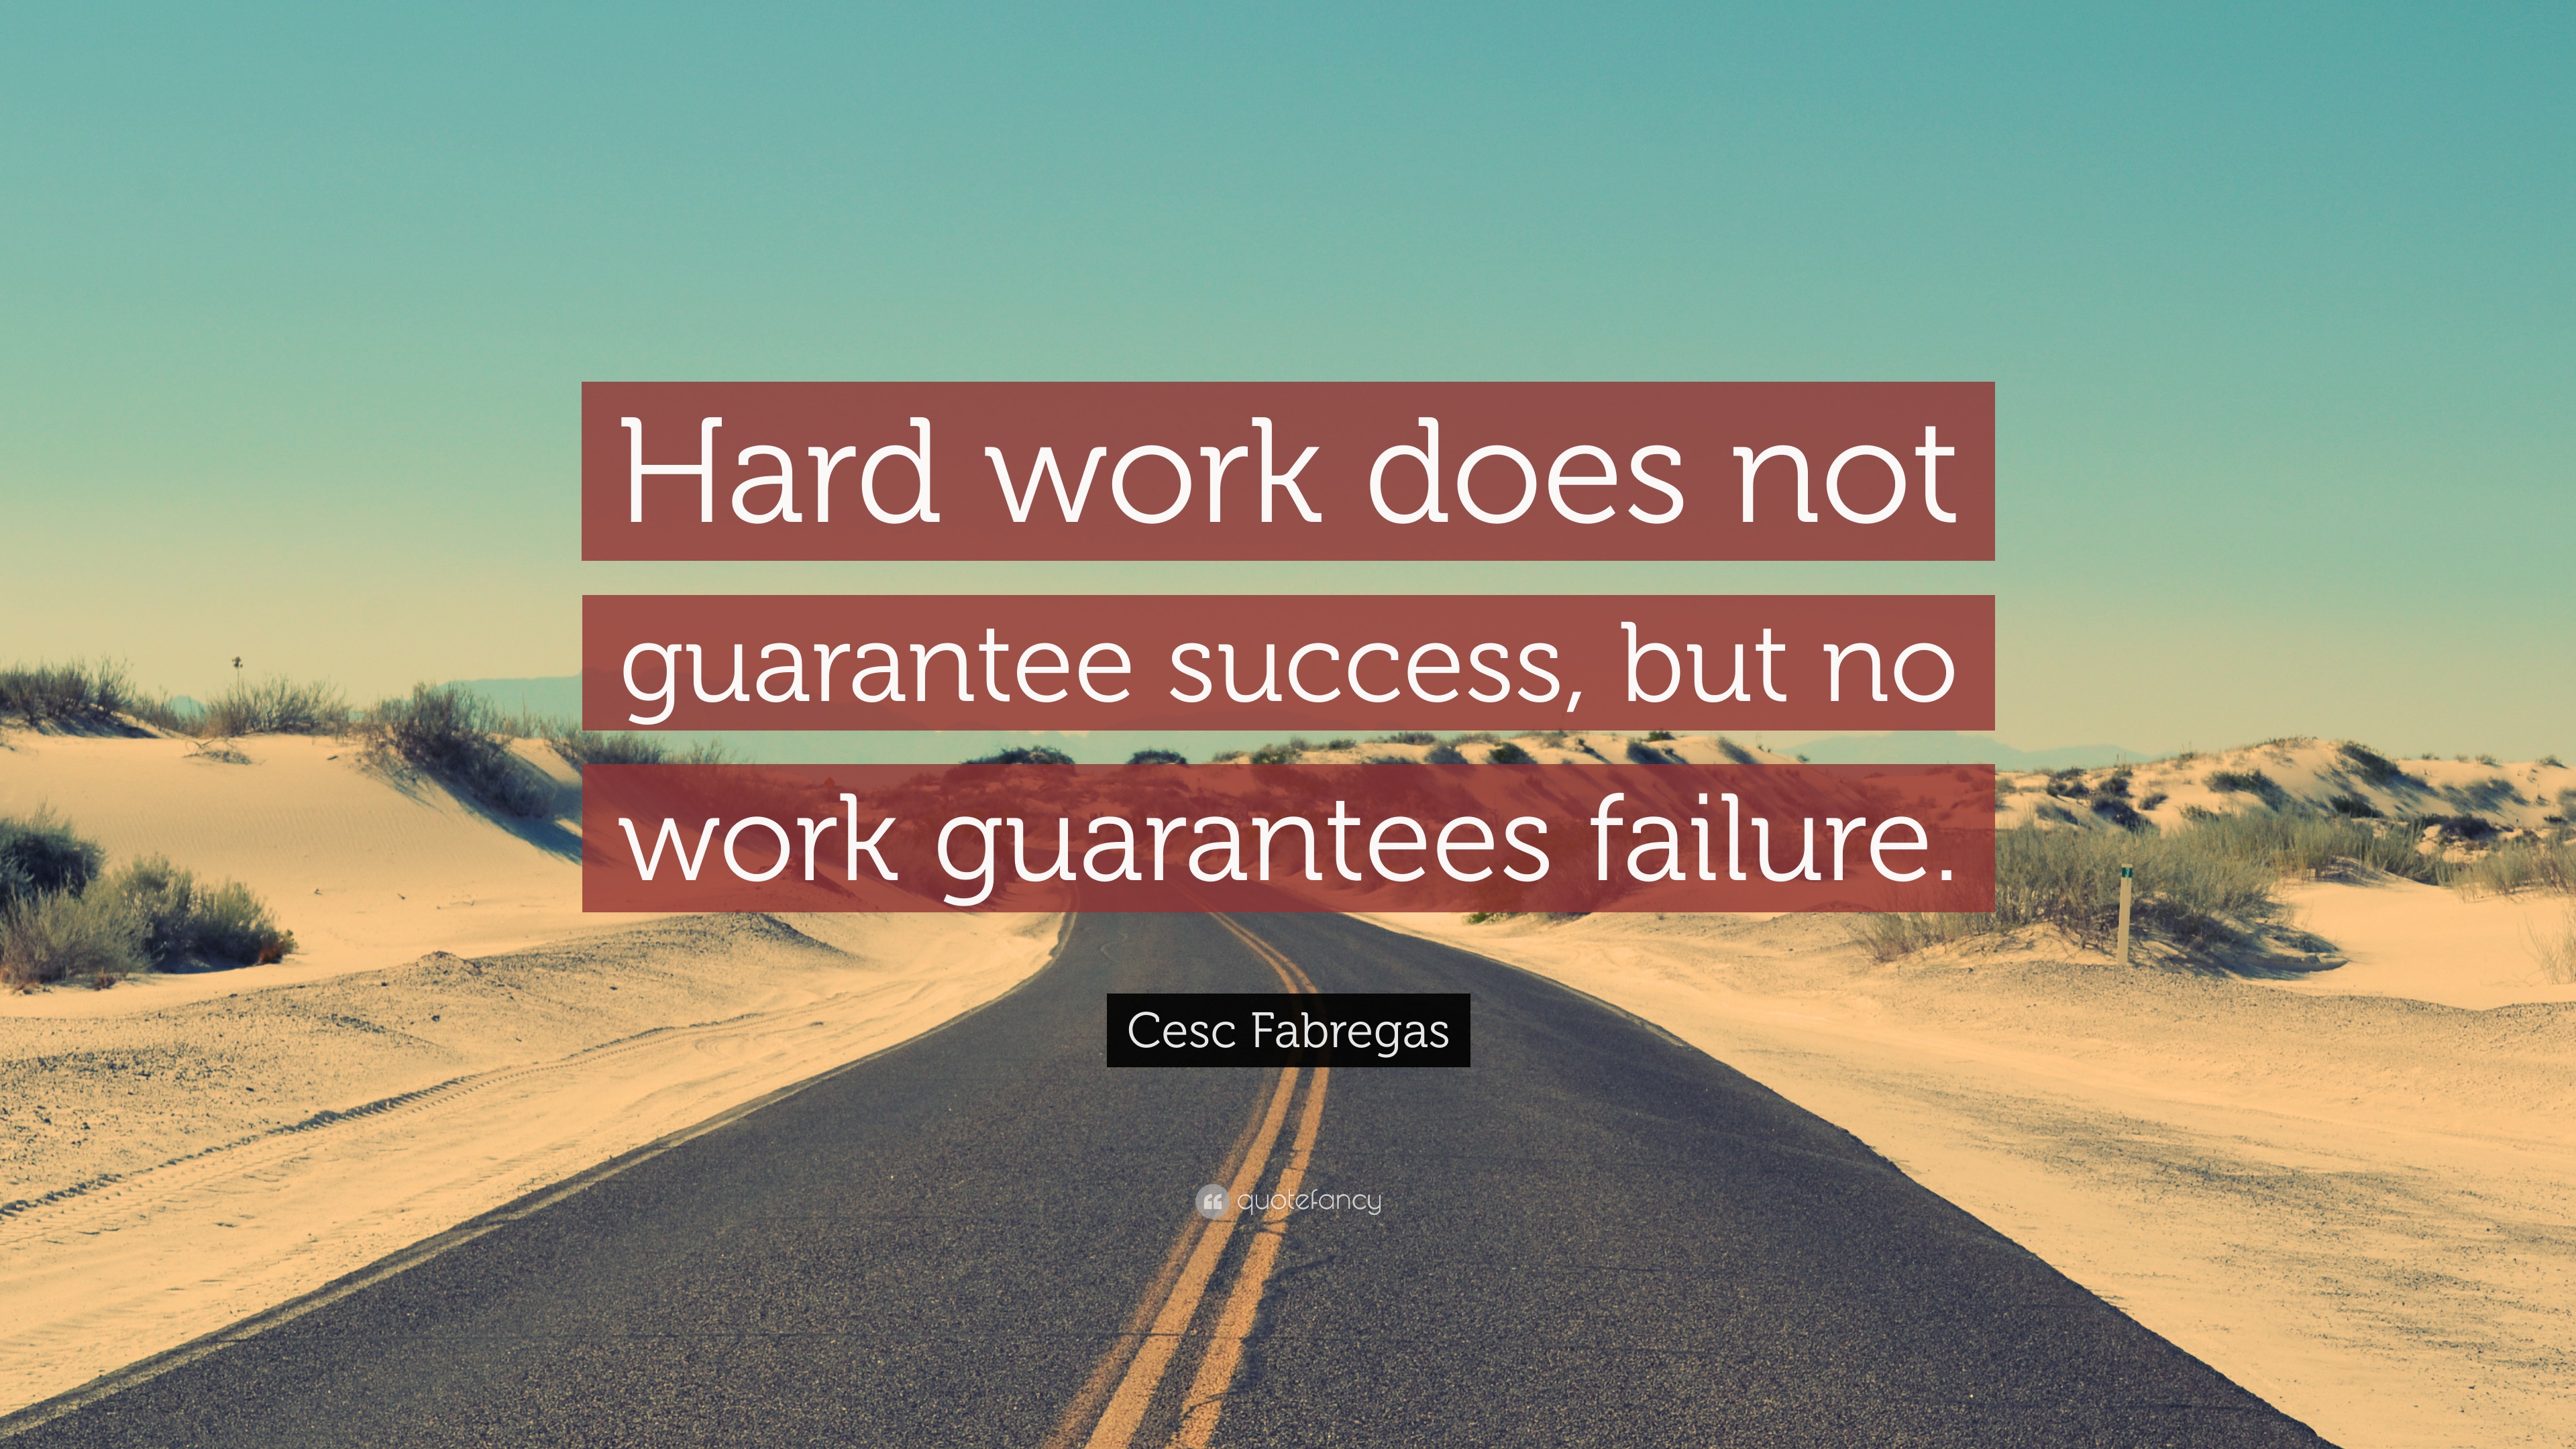 Cesc Fabregas Quote: “Hard work does not guarantee success, but no work ...